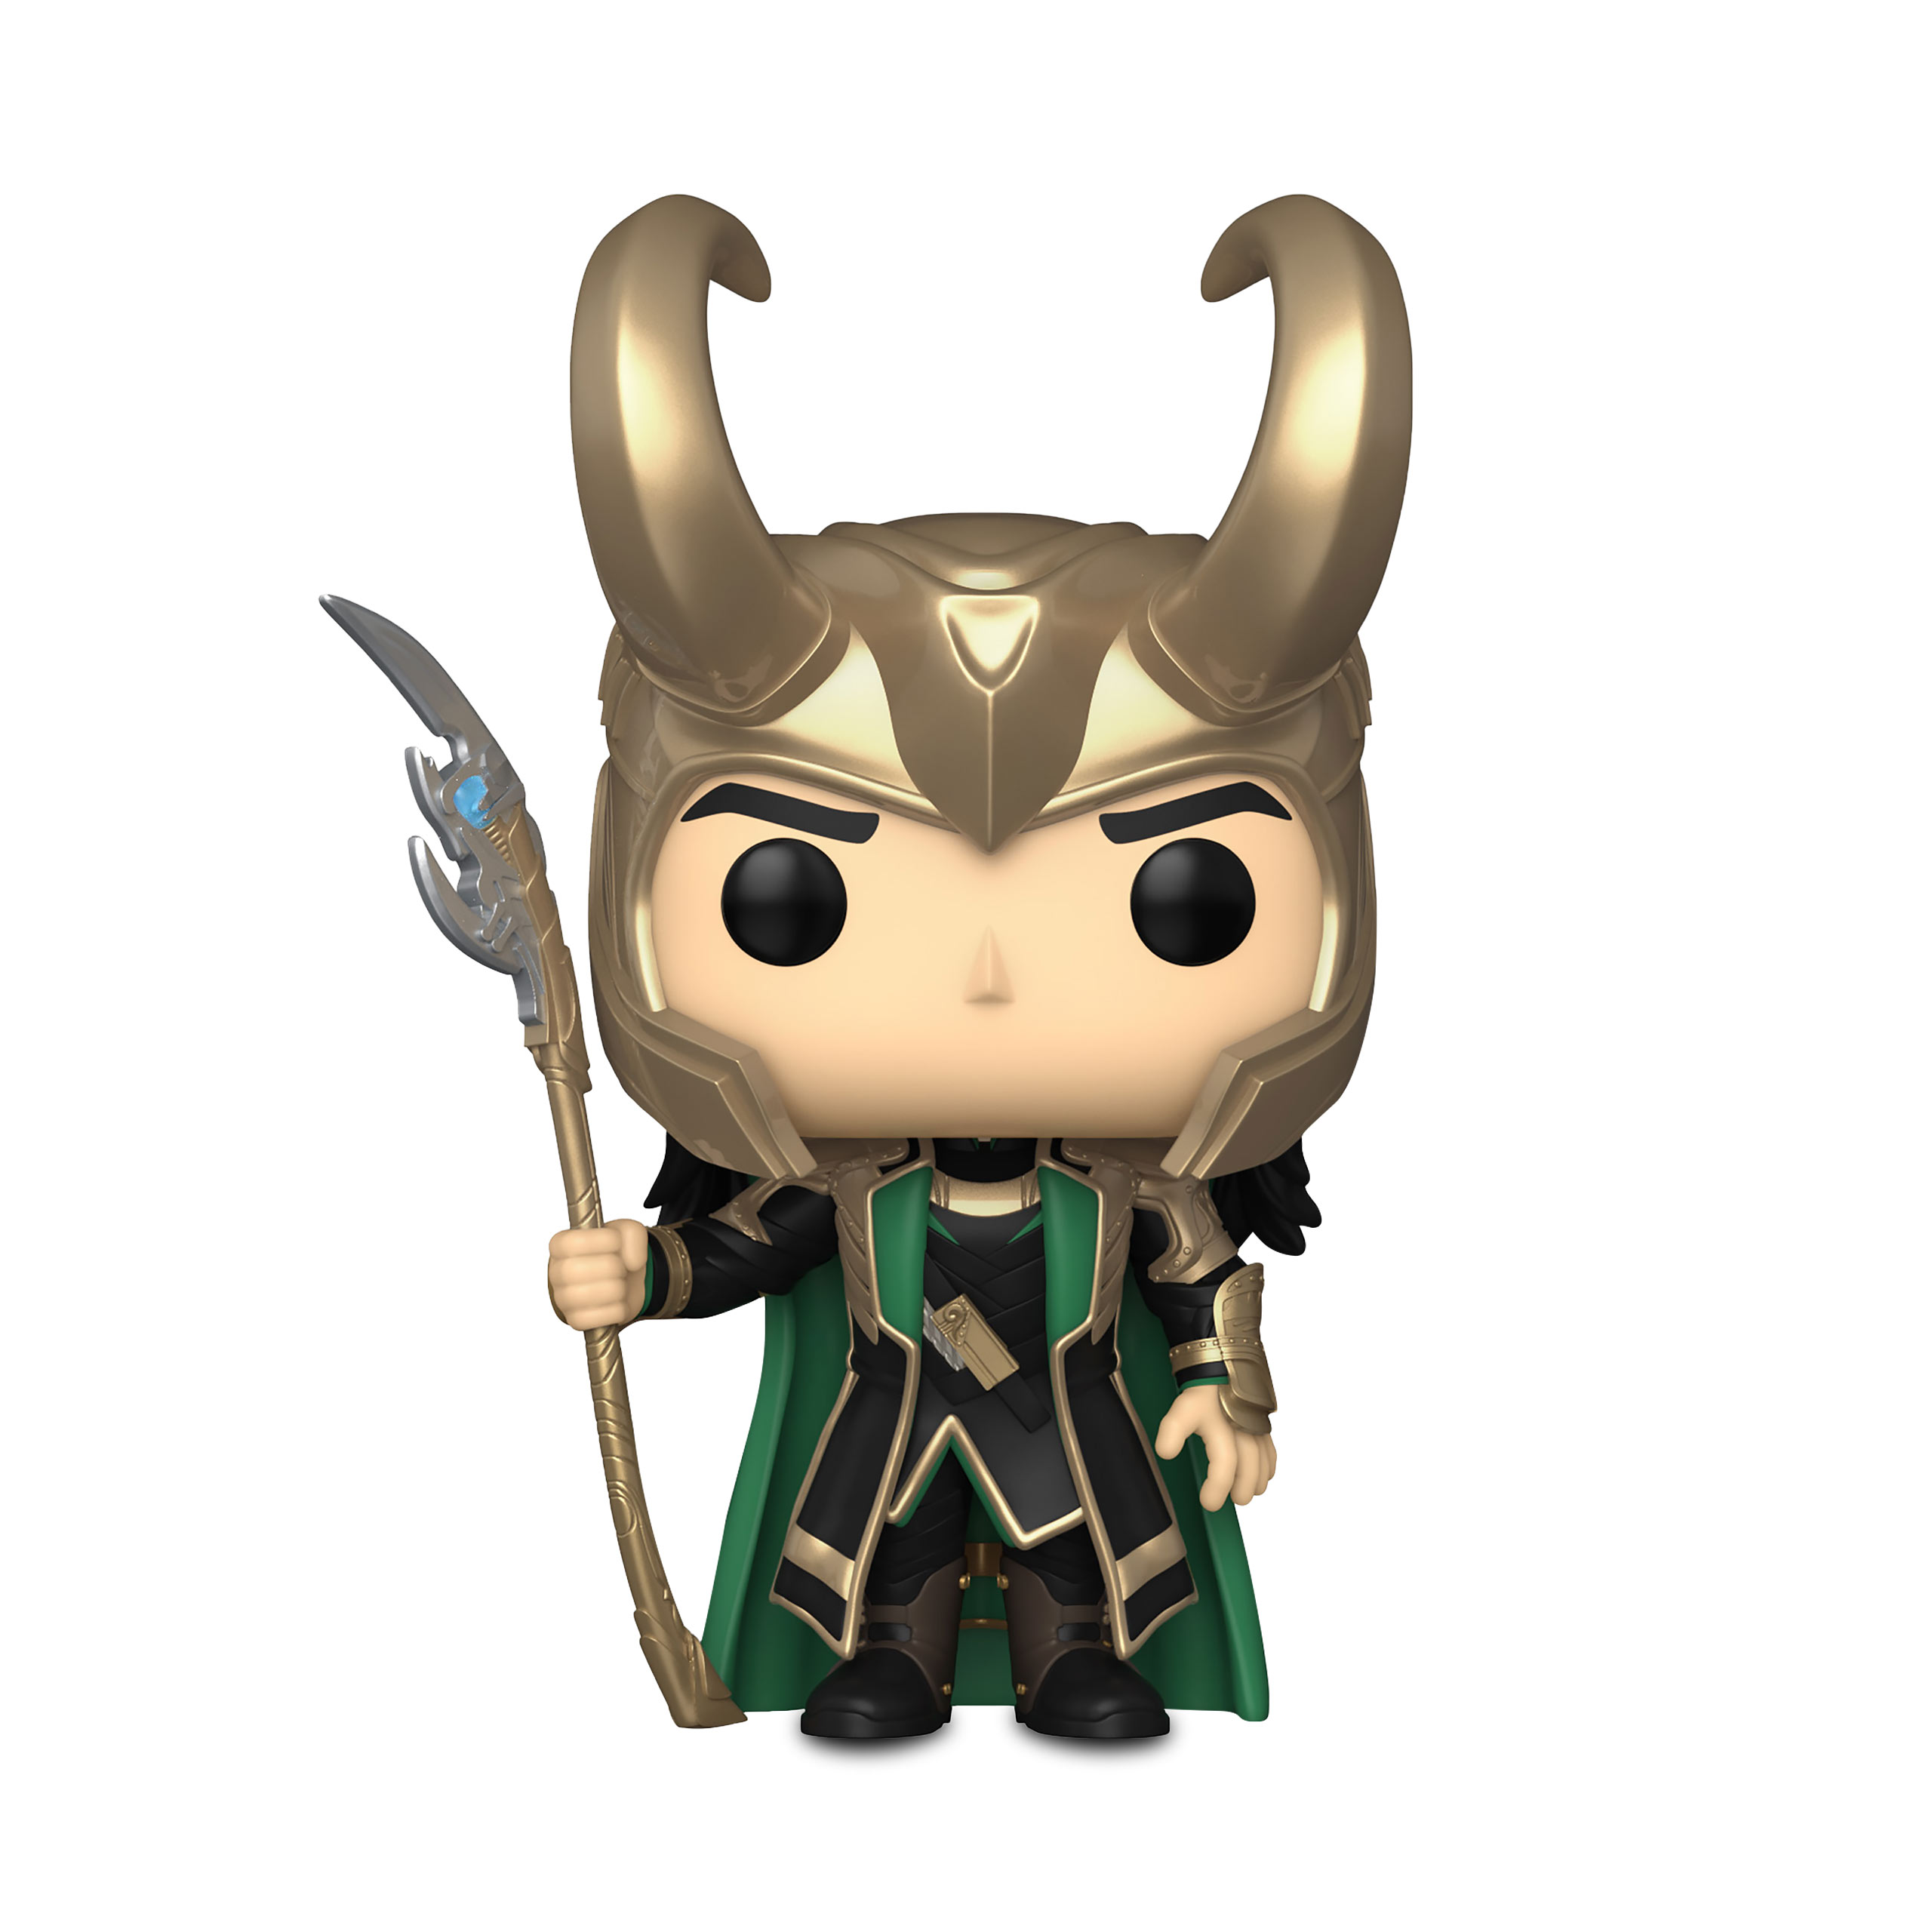 Marvel - Loki with Scepter Glow in the Dark Funko Pop Bobblehead Figure